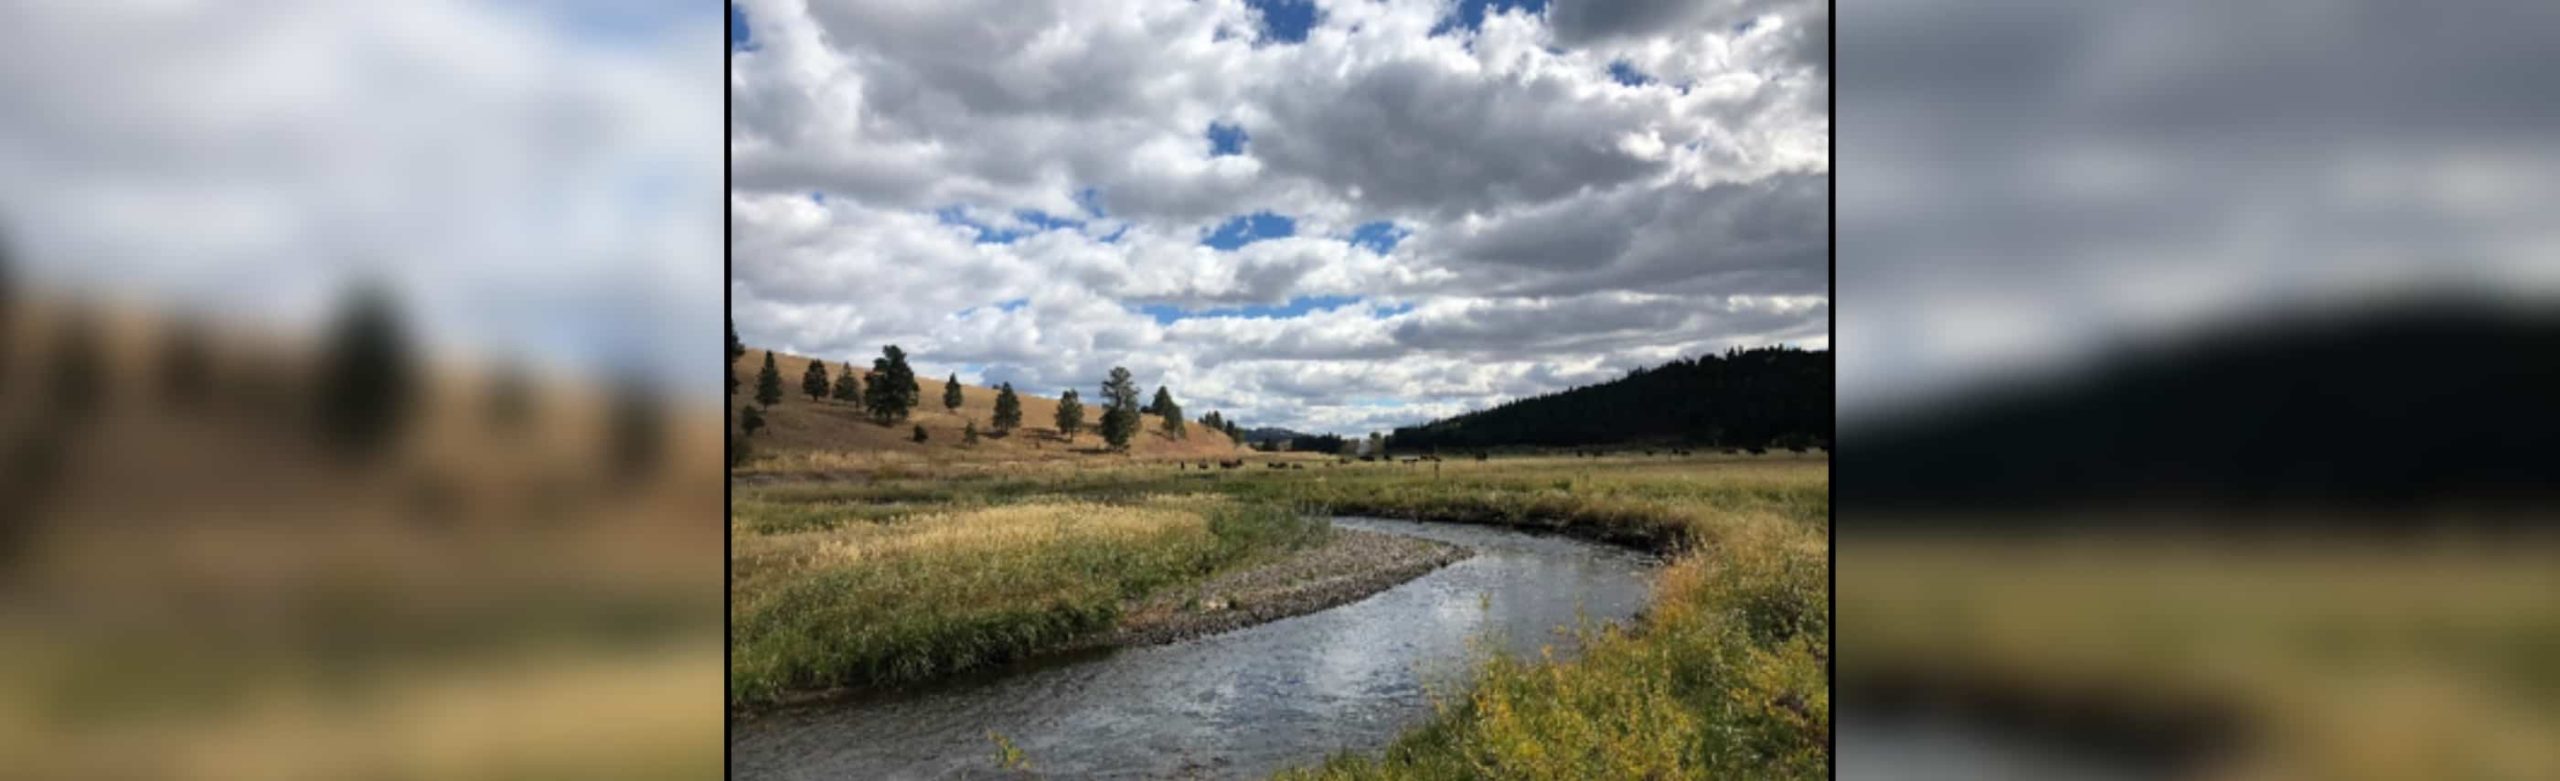 Blackfoot River Fund Update: Nevada Creek Stream Bank Restoration Helps Habitat and Montana Ranchers Image